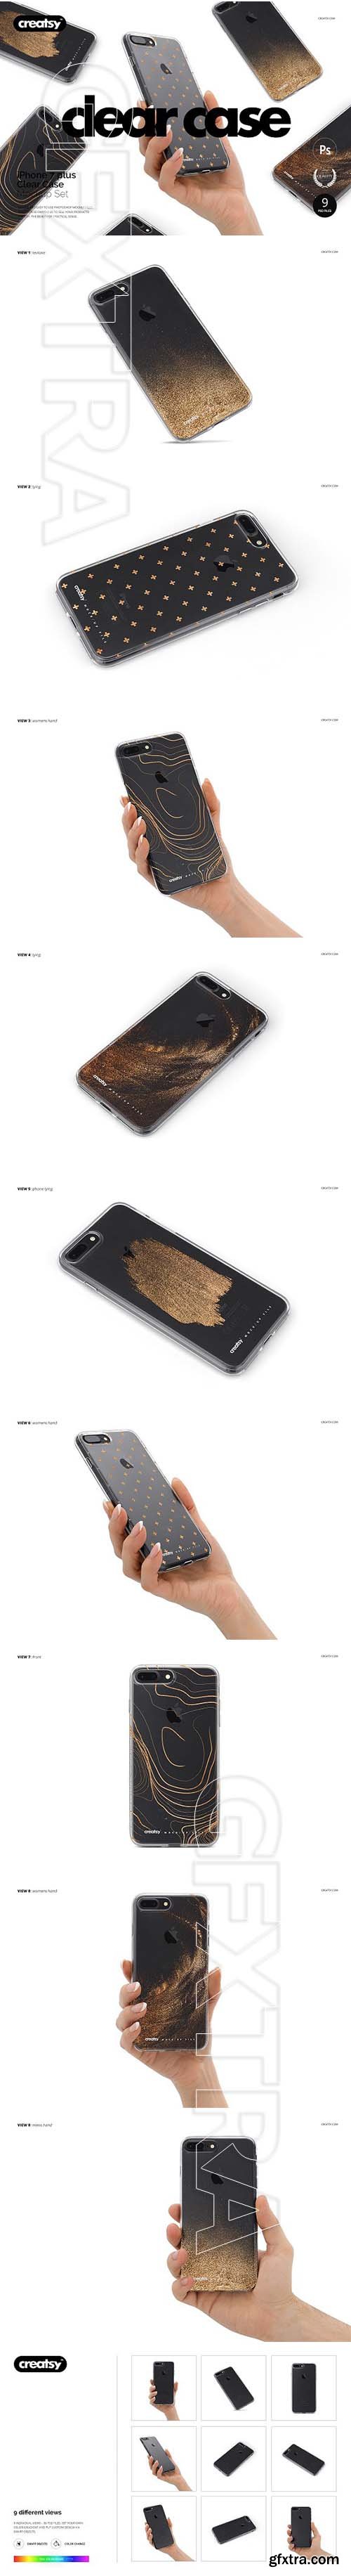 CreativeMarket - iPhone 7 Plus Clear Case Mockup Set 1984152